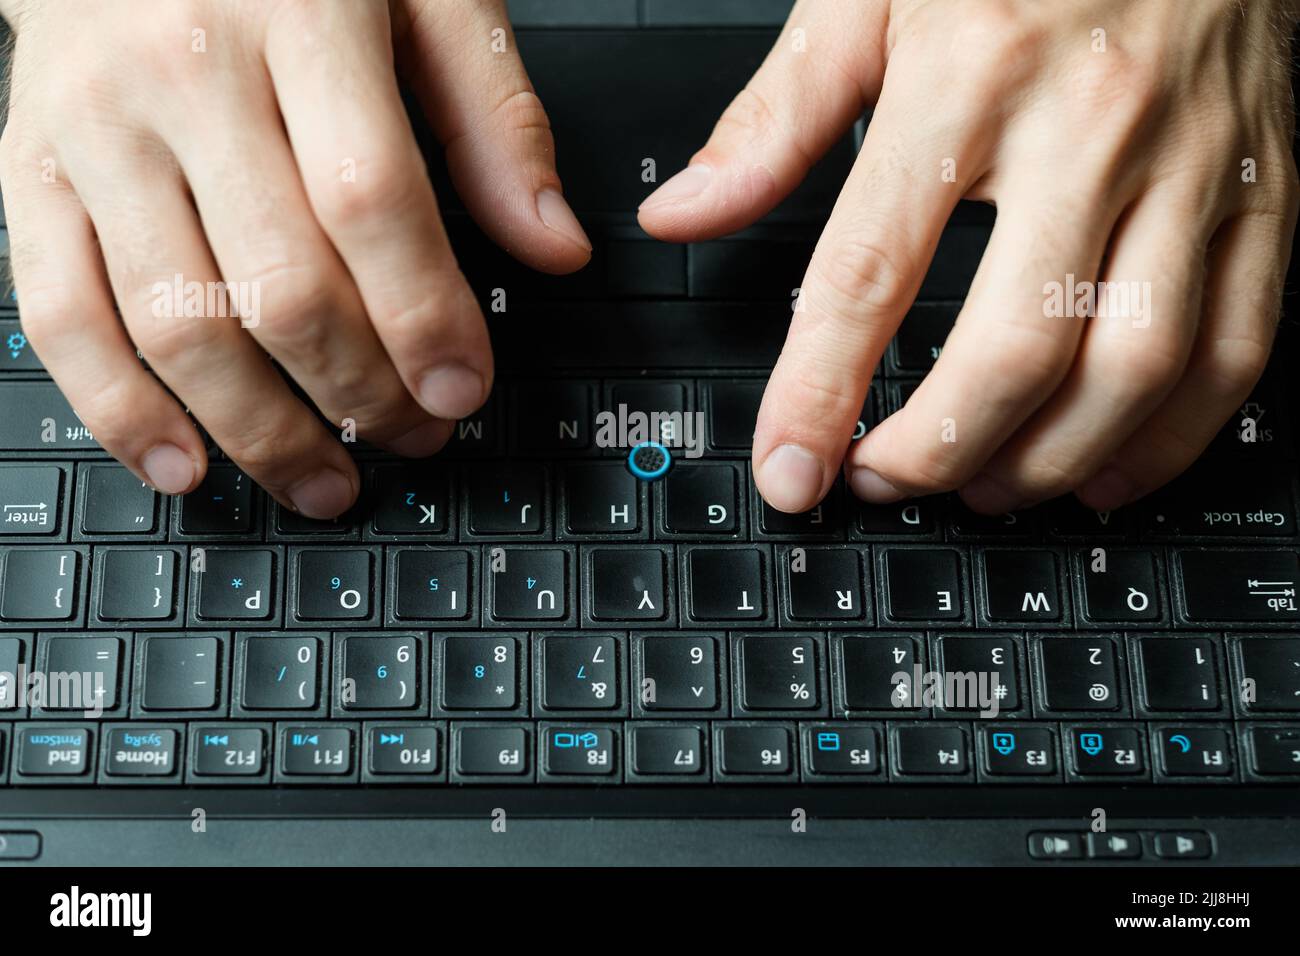 blogging social media laptop man hands typing Stock Photo